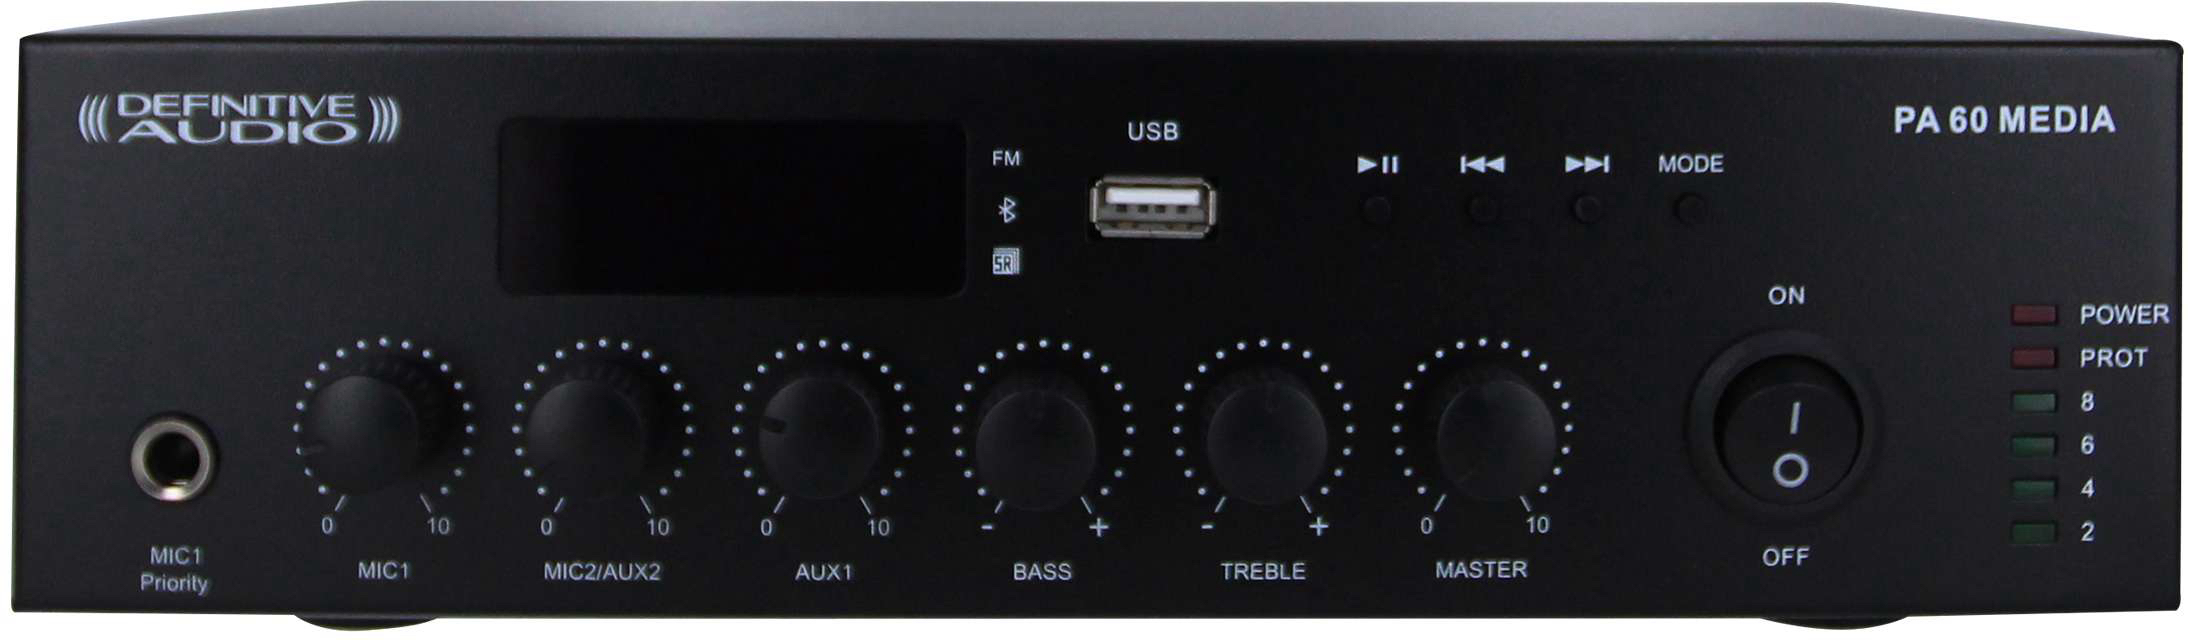 Definitive Audio Pa 60 Media - Multiple channels power amplifier - Main picture